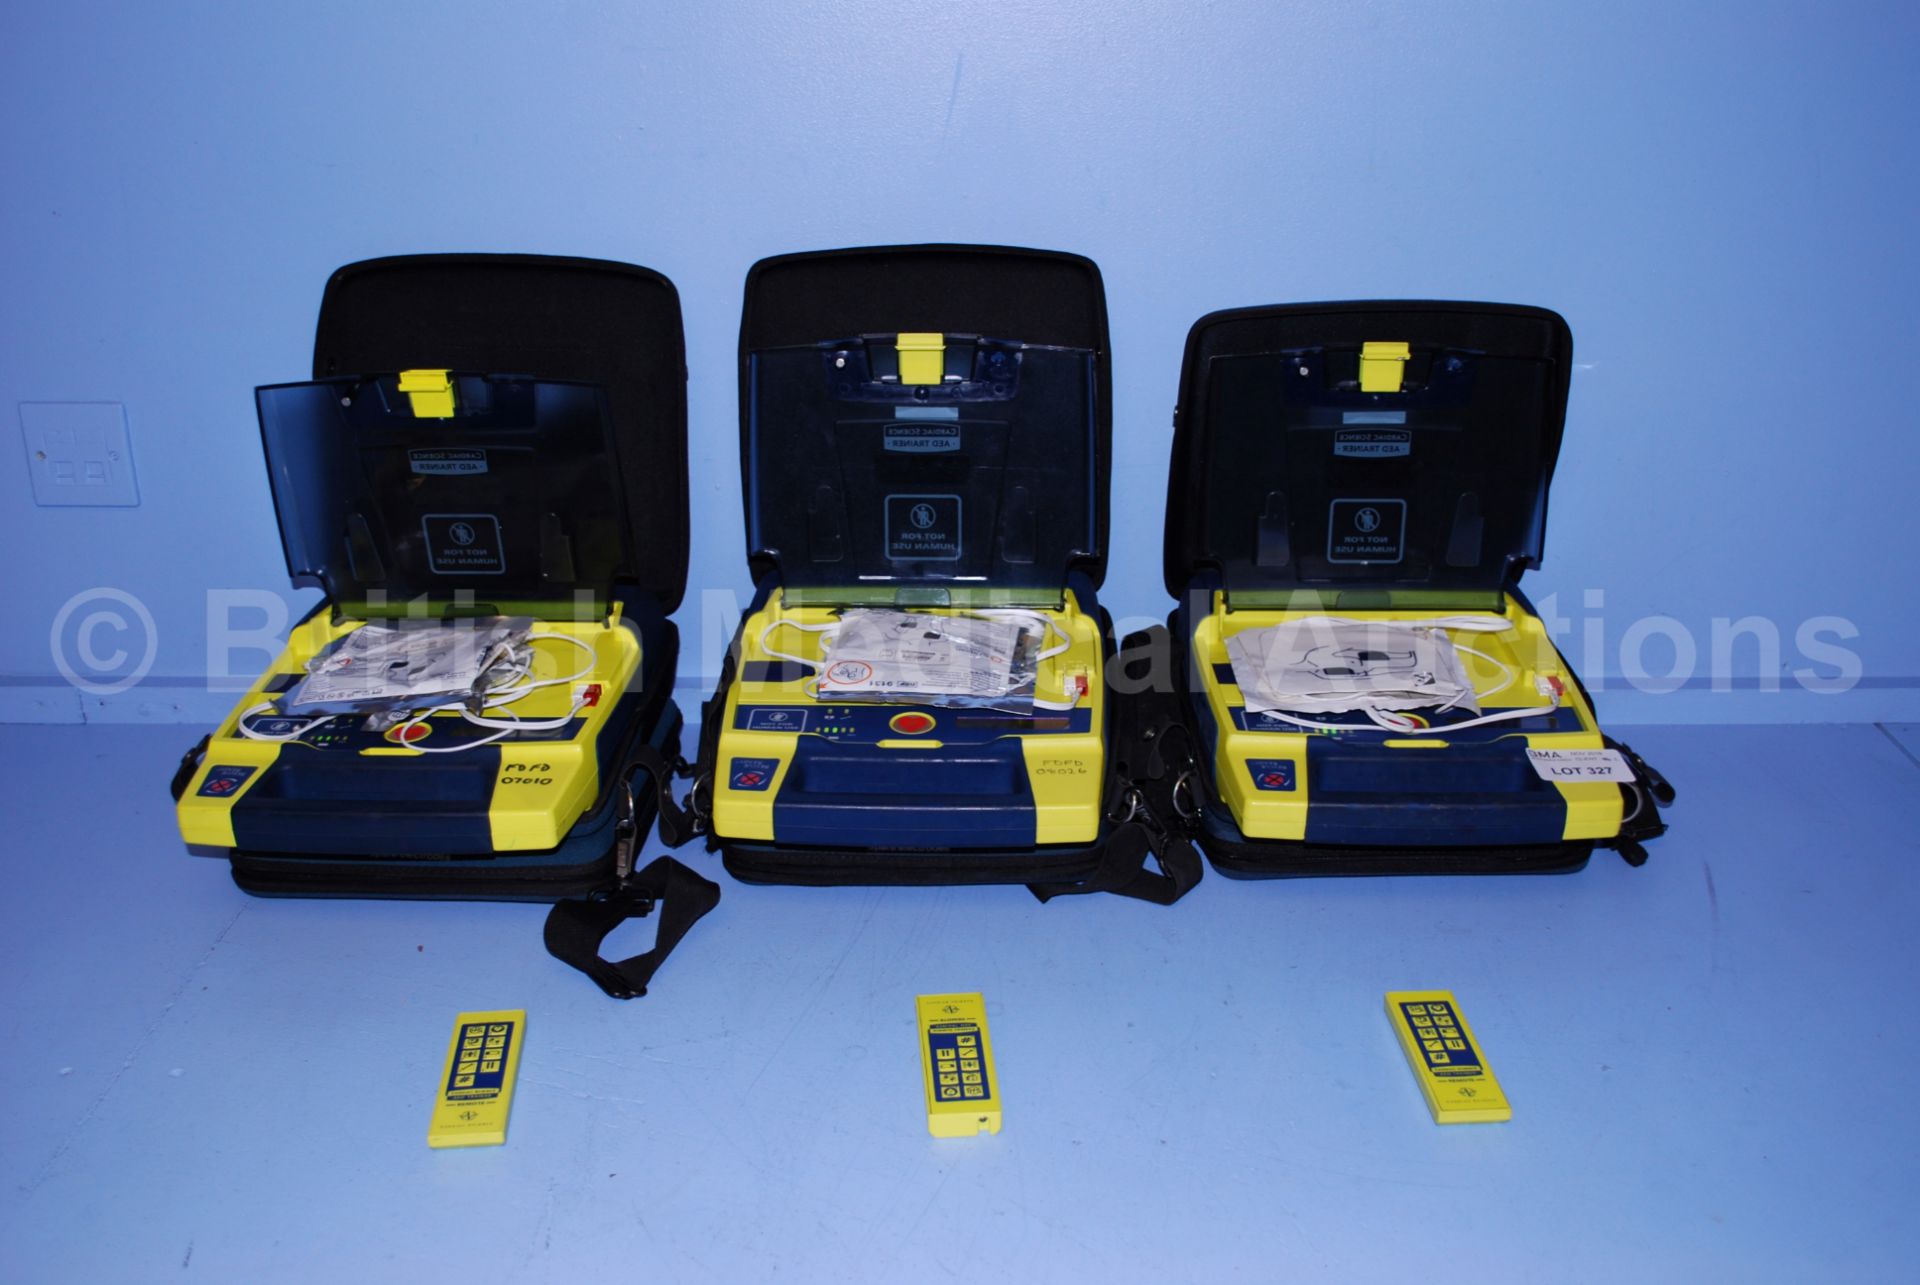 3 x Cardiac Science AED Trainer Defibrillators wit